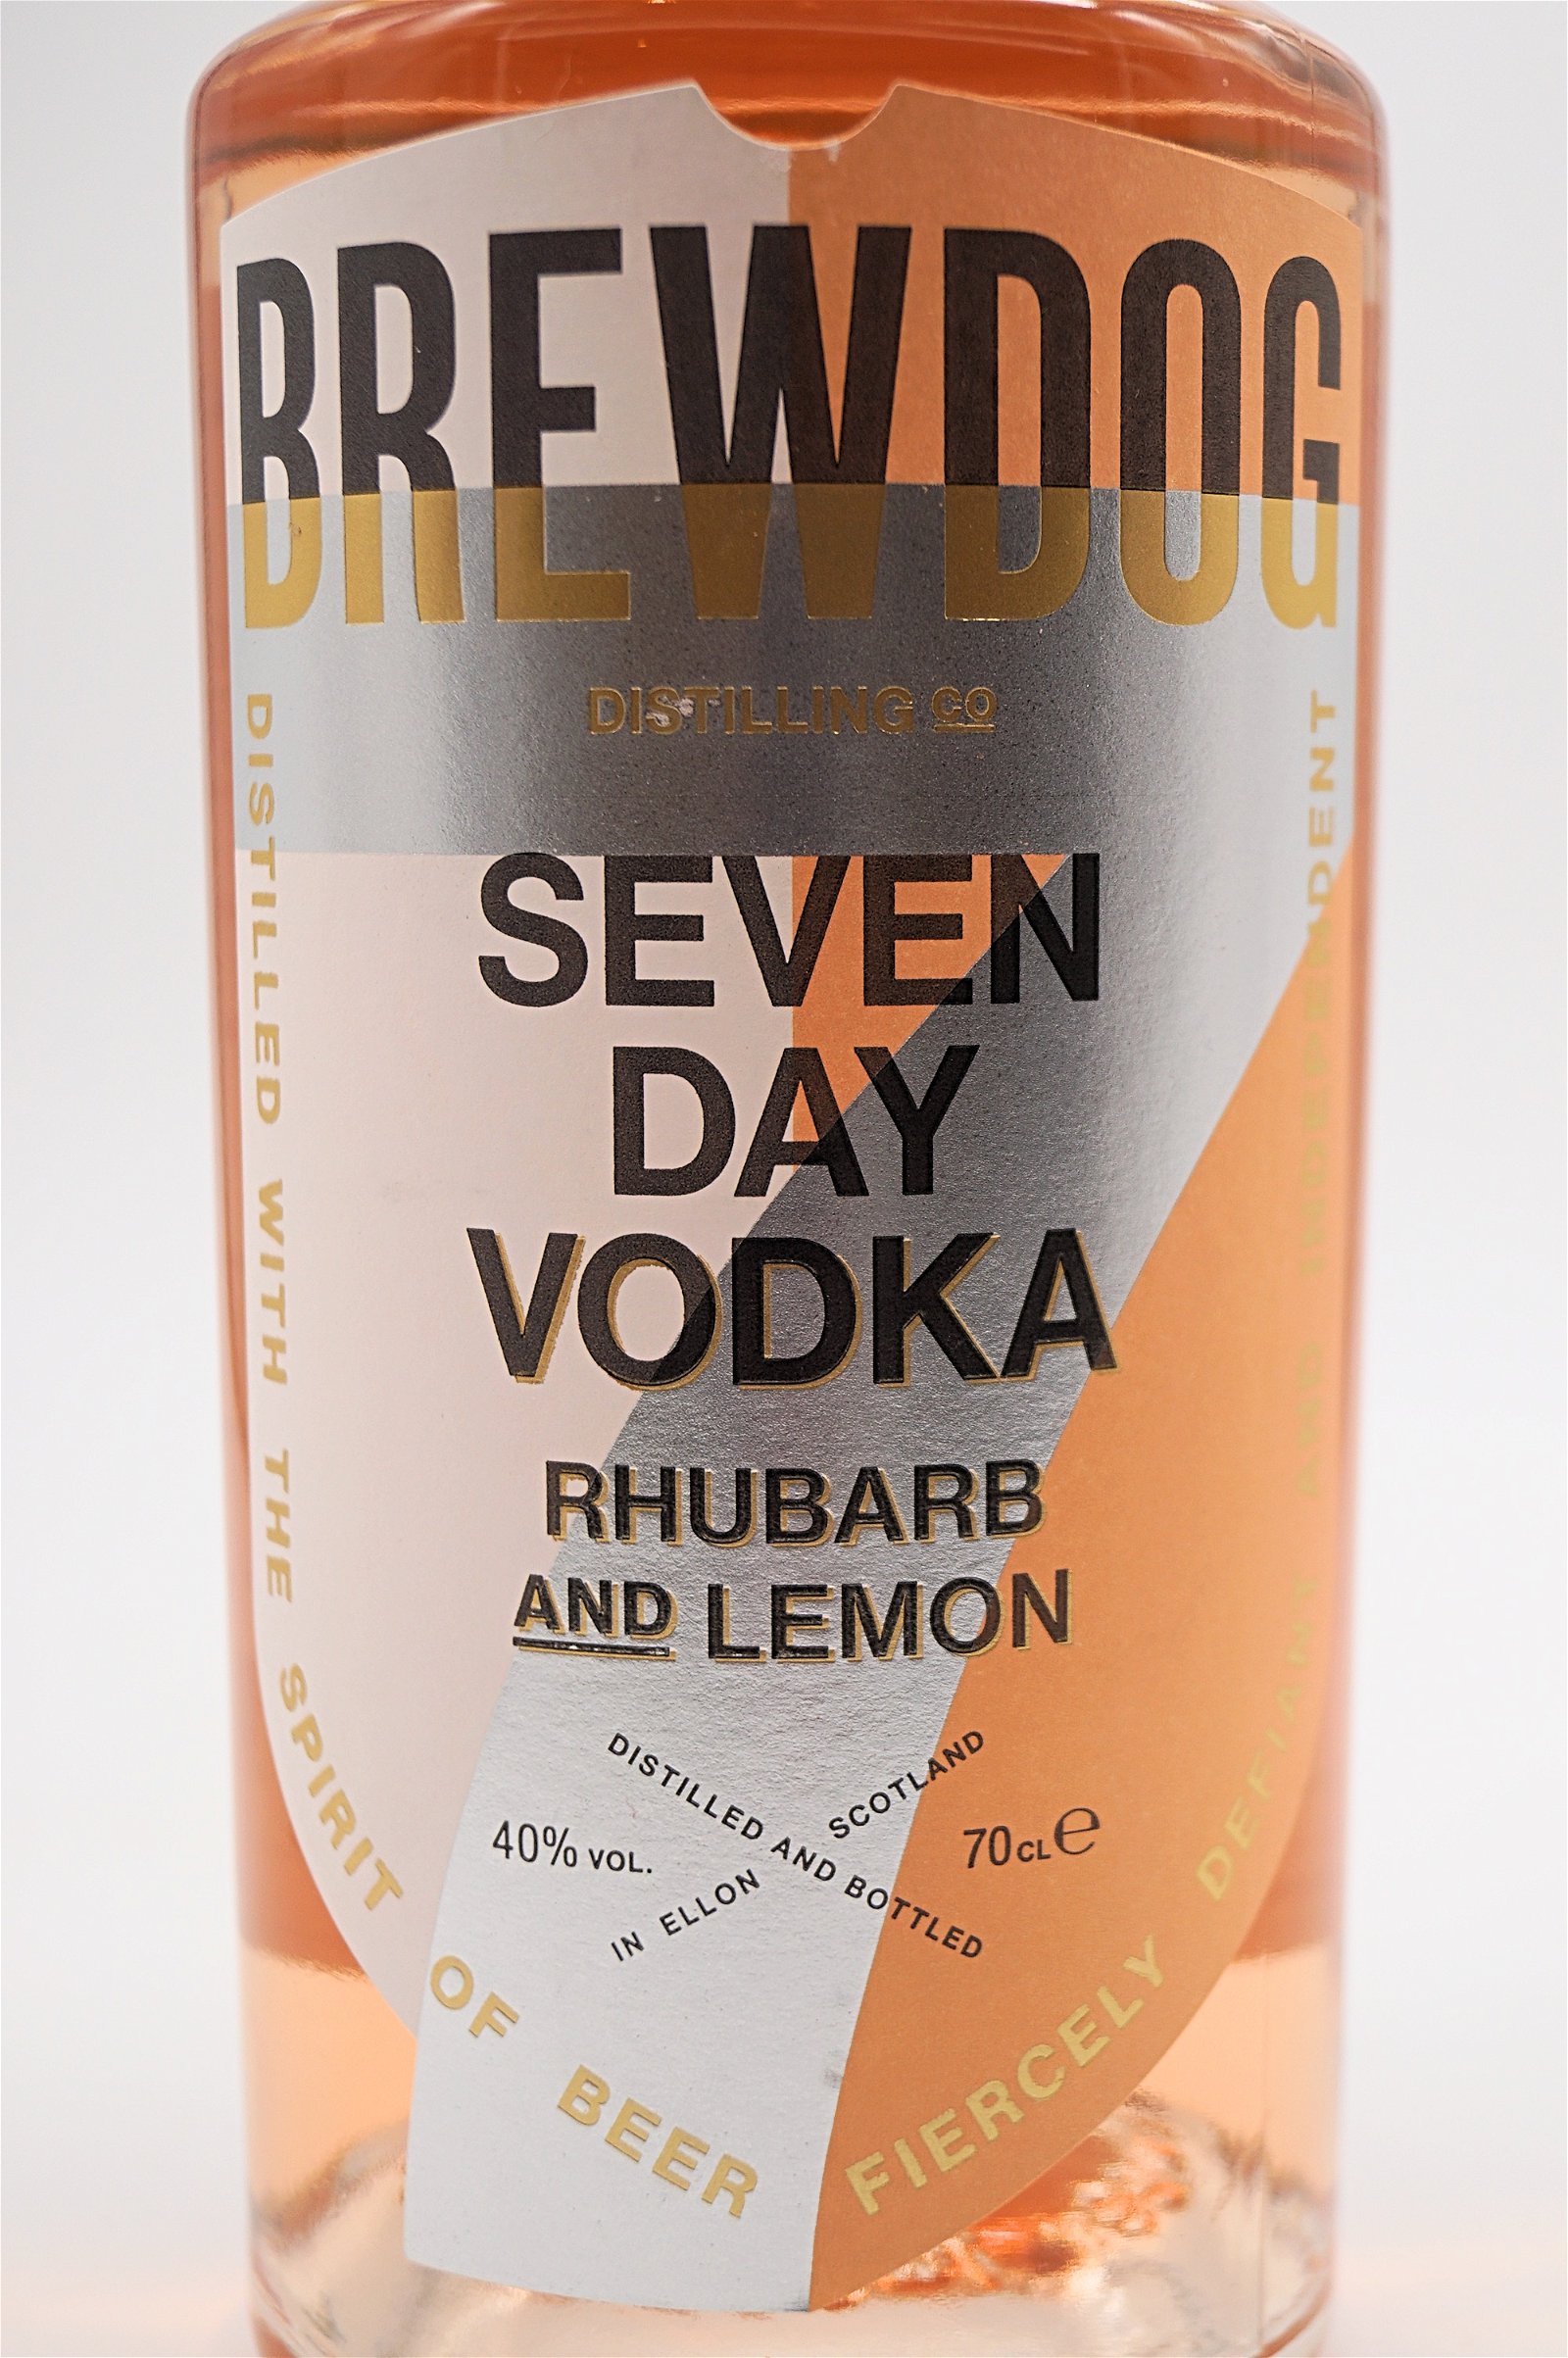 BrewDog Distilling Co. Seven Day Vodka Rhubarb and Lemon